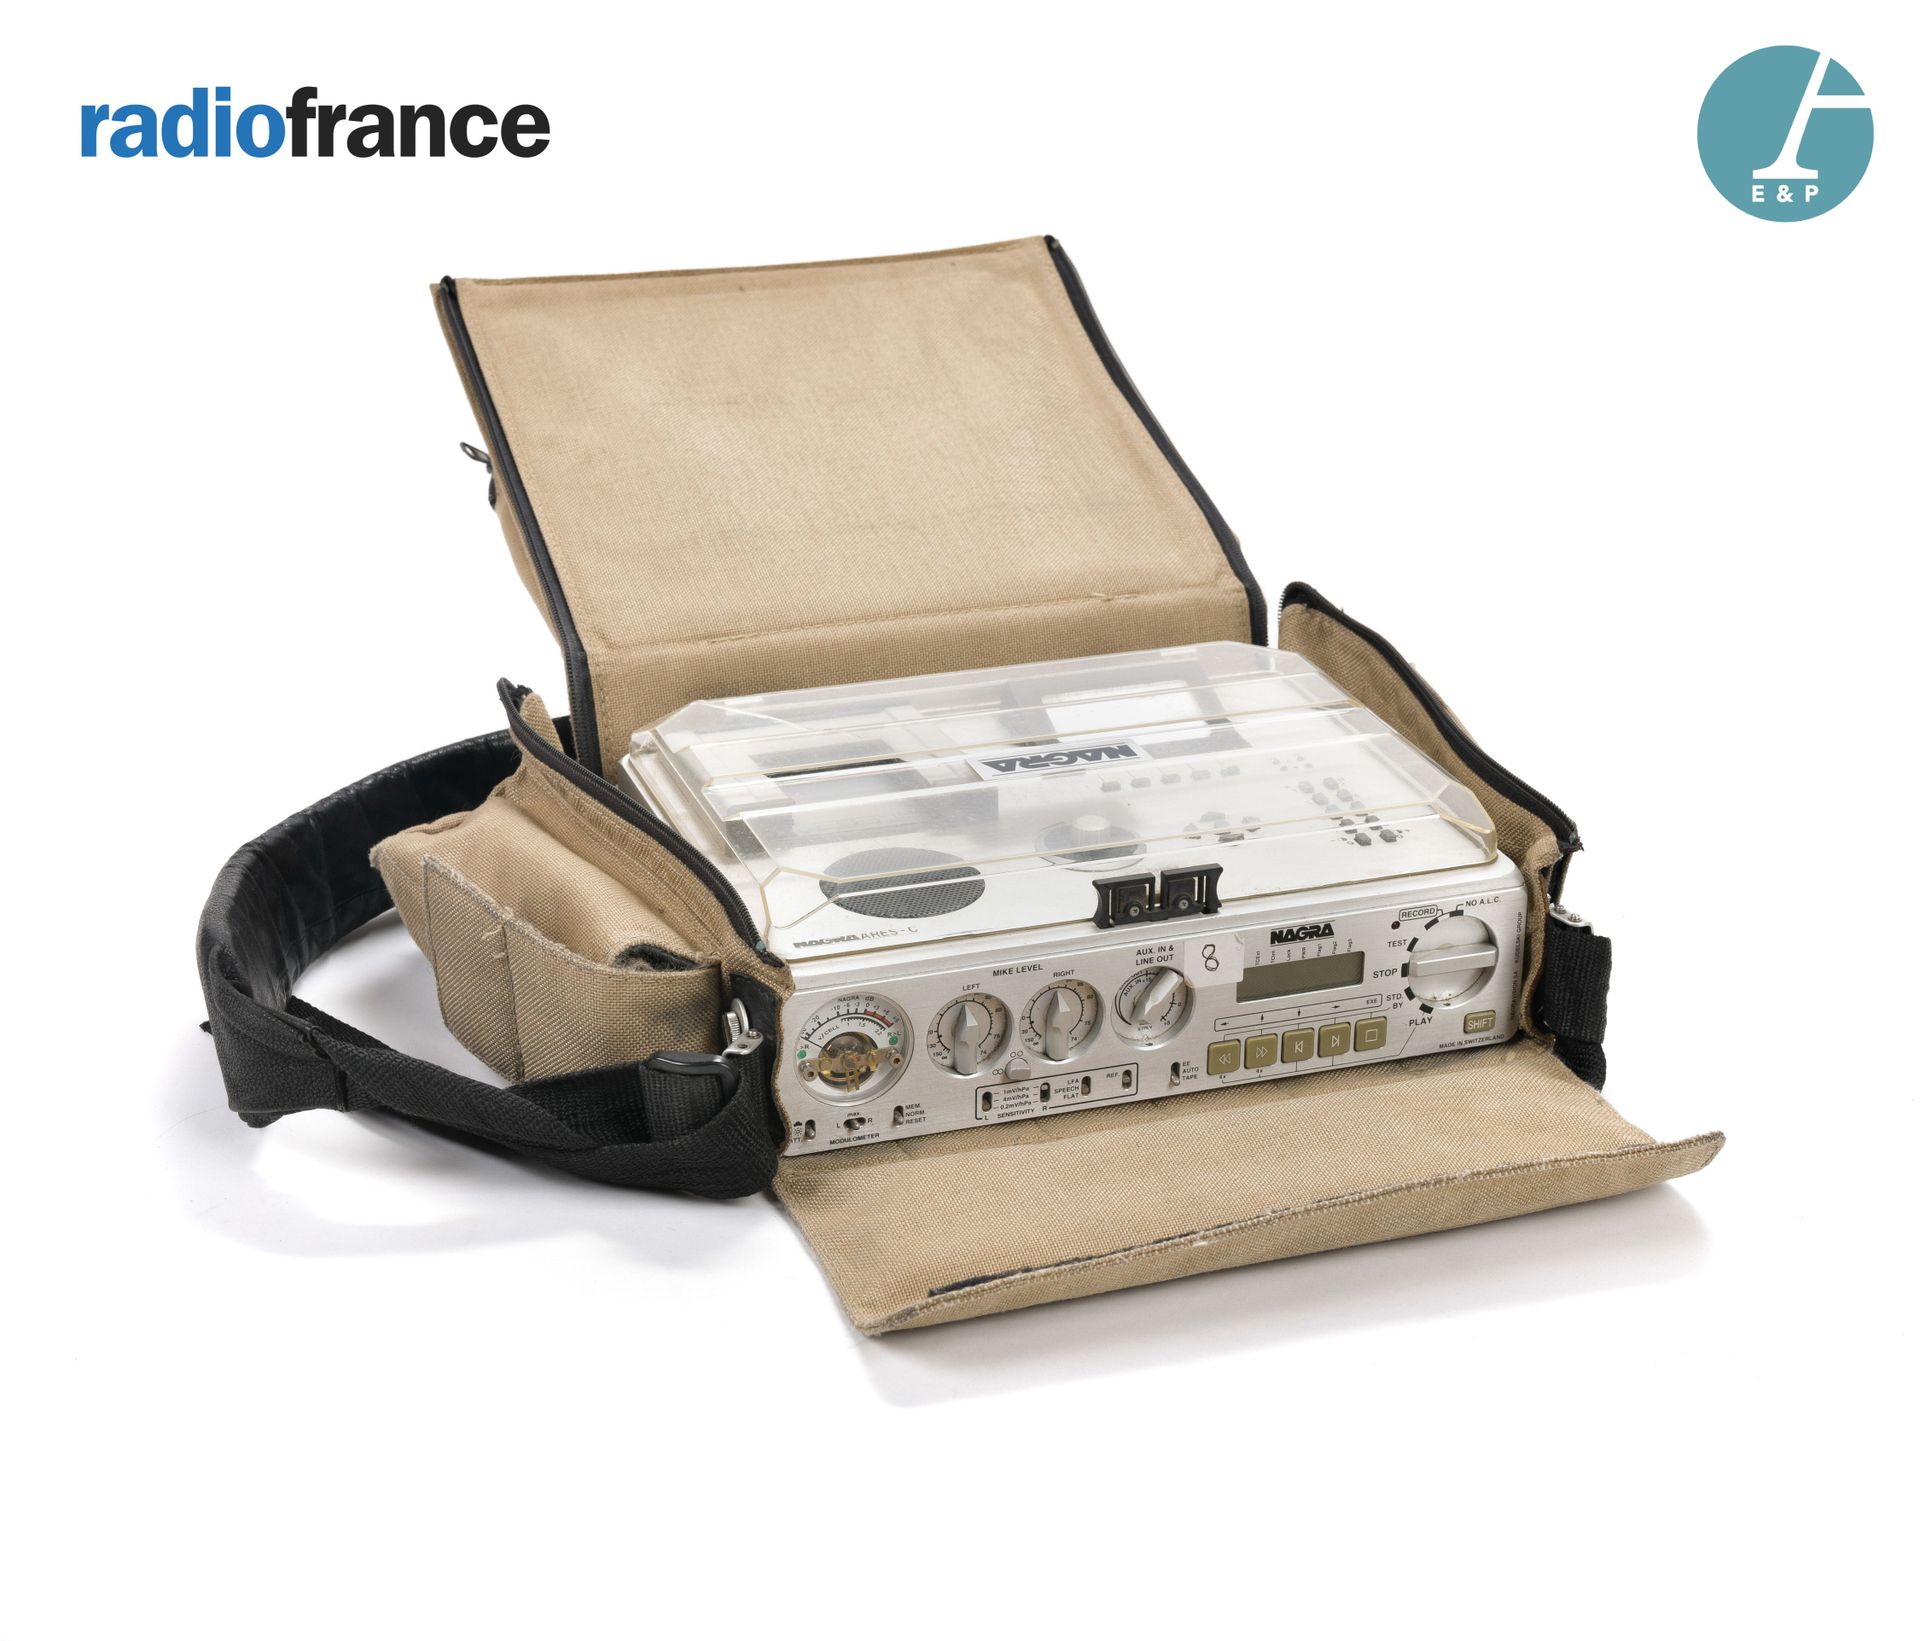 Null NAGRA数字录音机，Ares-C，带有法国广播电台标志的原始米色布袋。

高：9.5厘米 - 宽：29厘米 - 深：22厘米

该设备处于使用状态，&hellip;